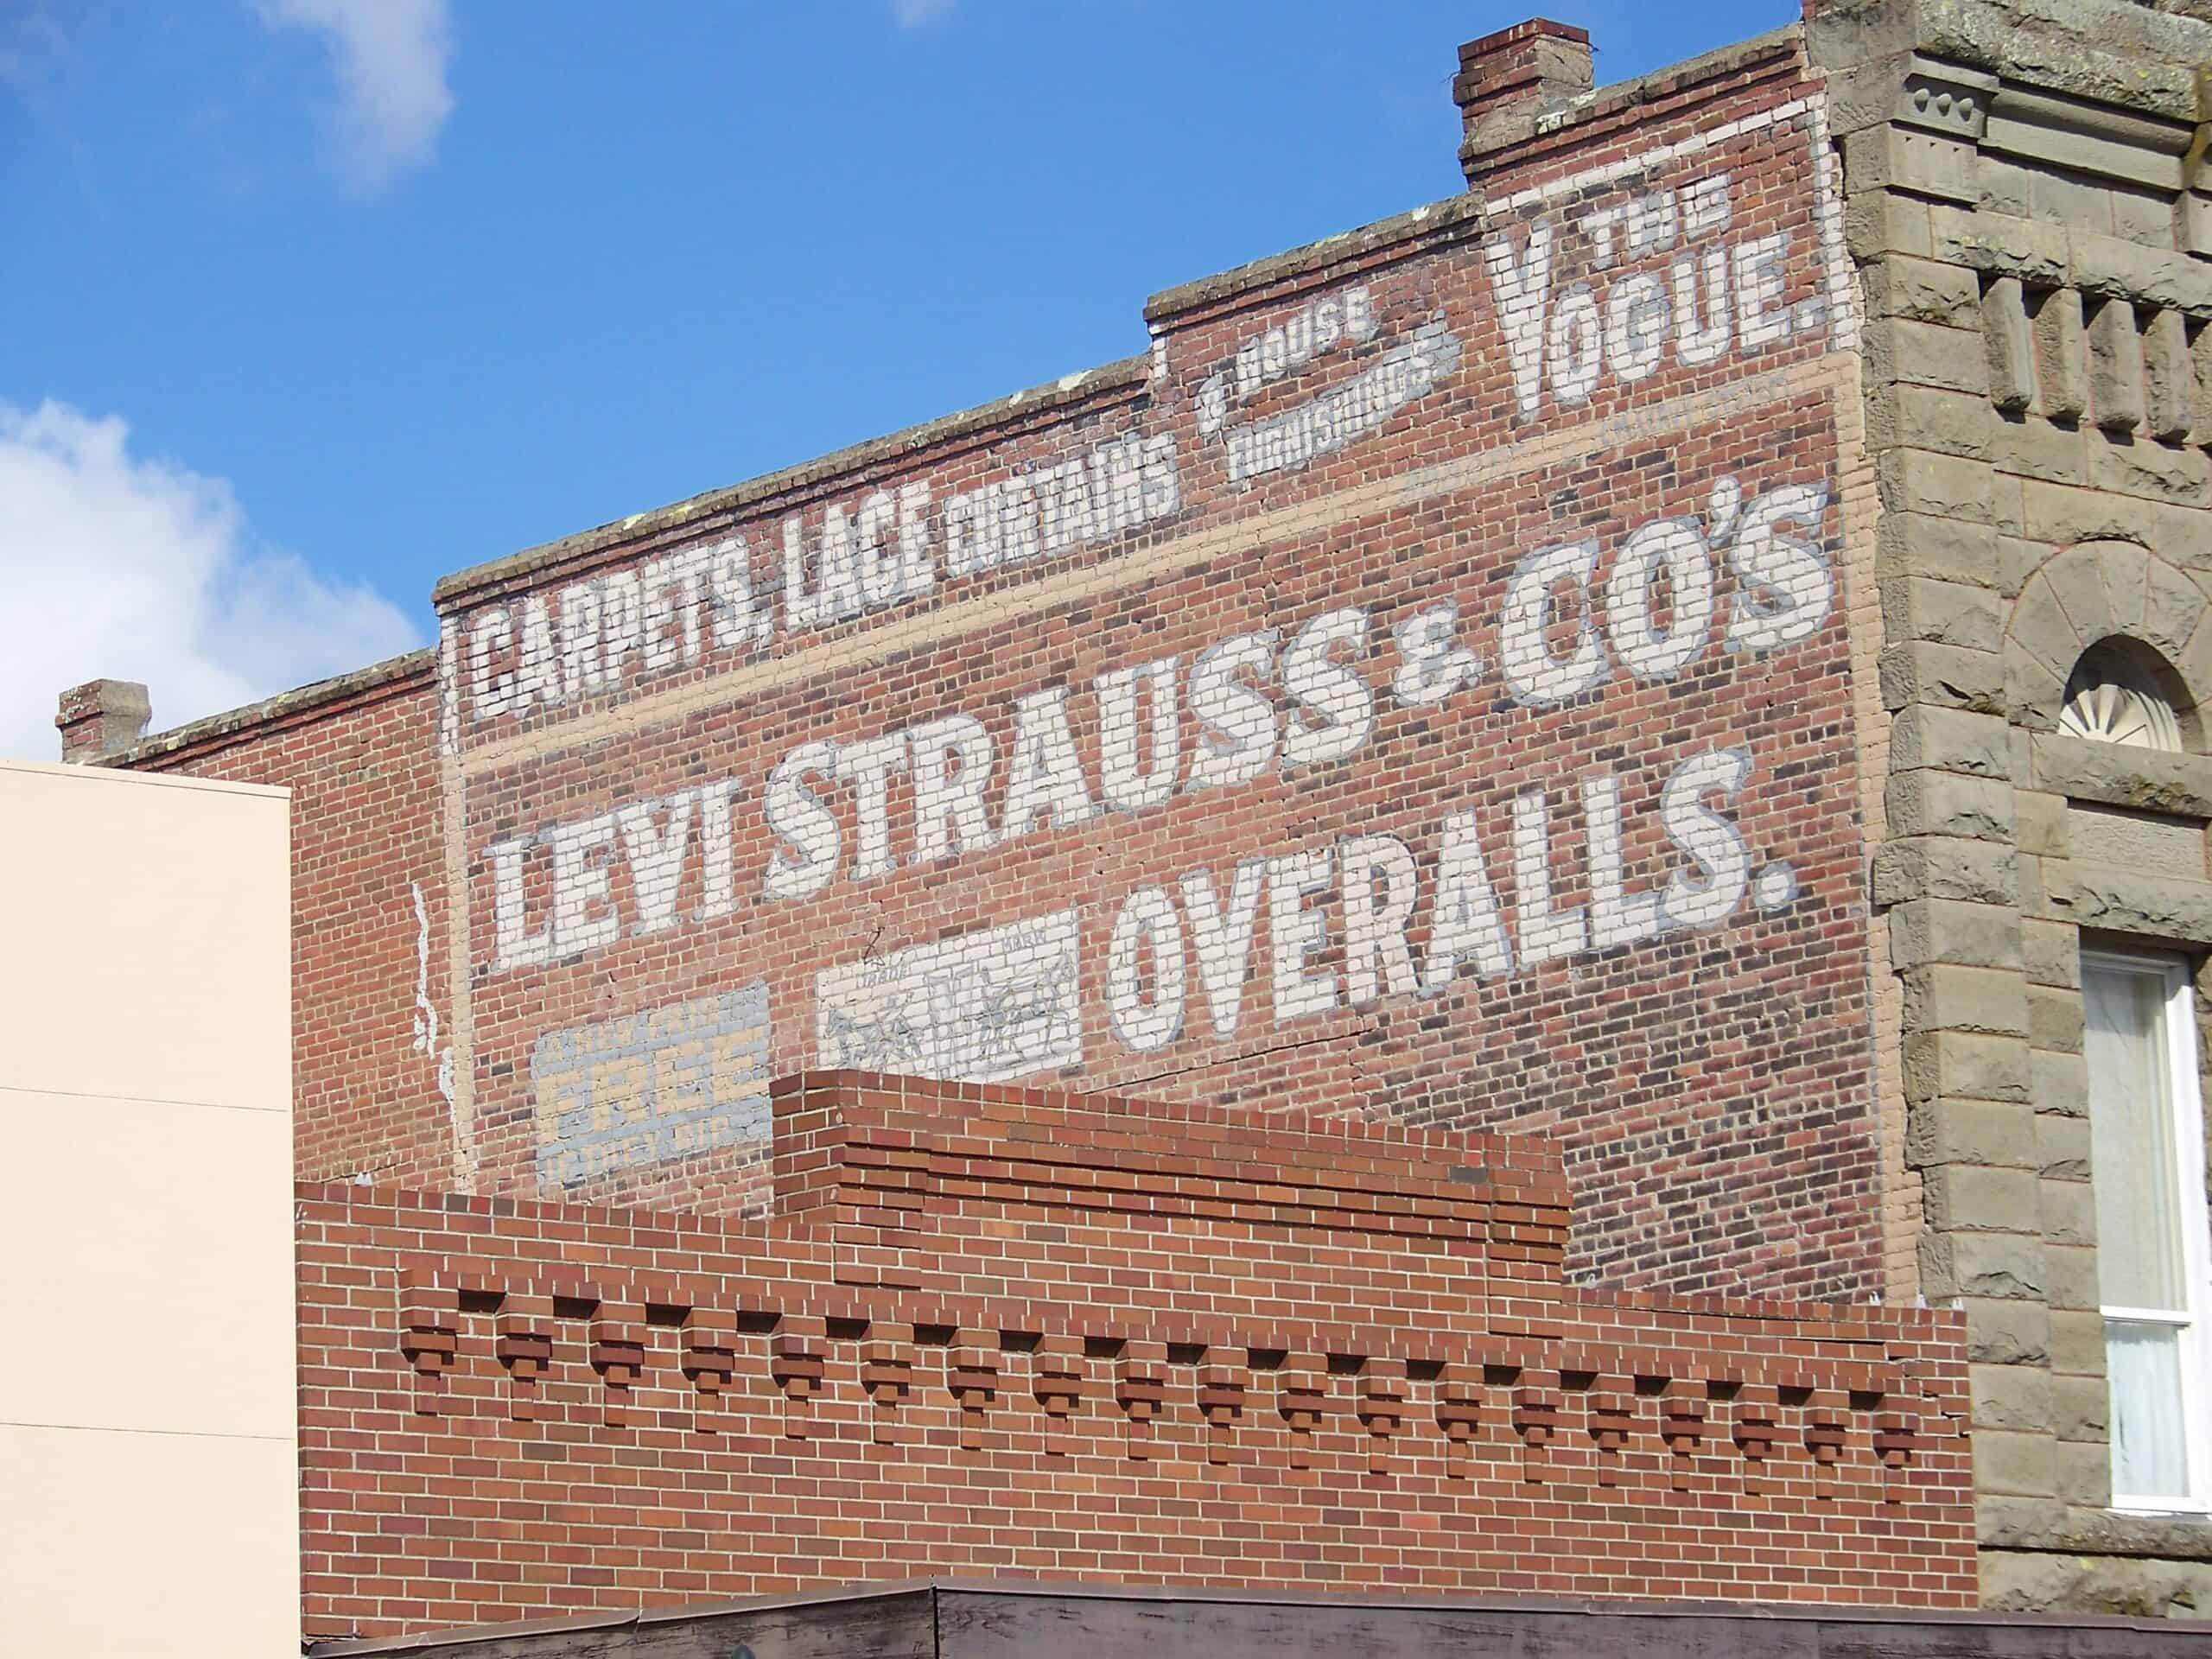 Levi Strauss vintage sign